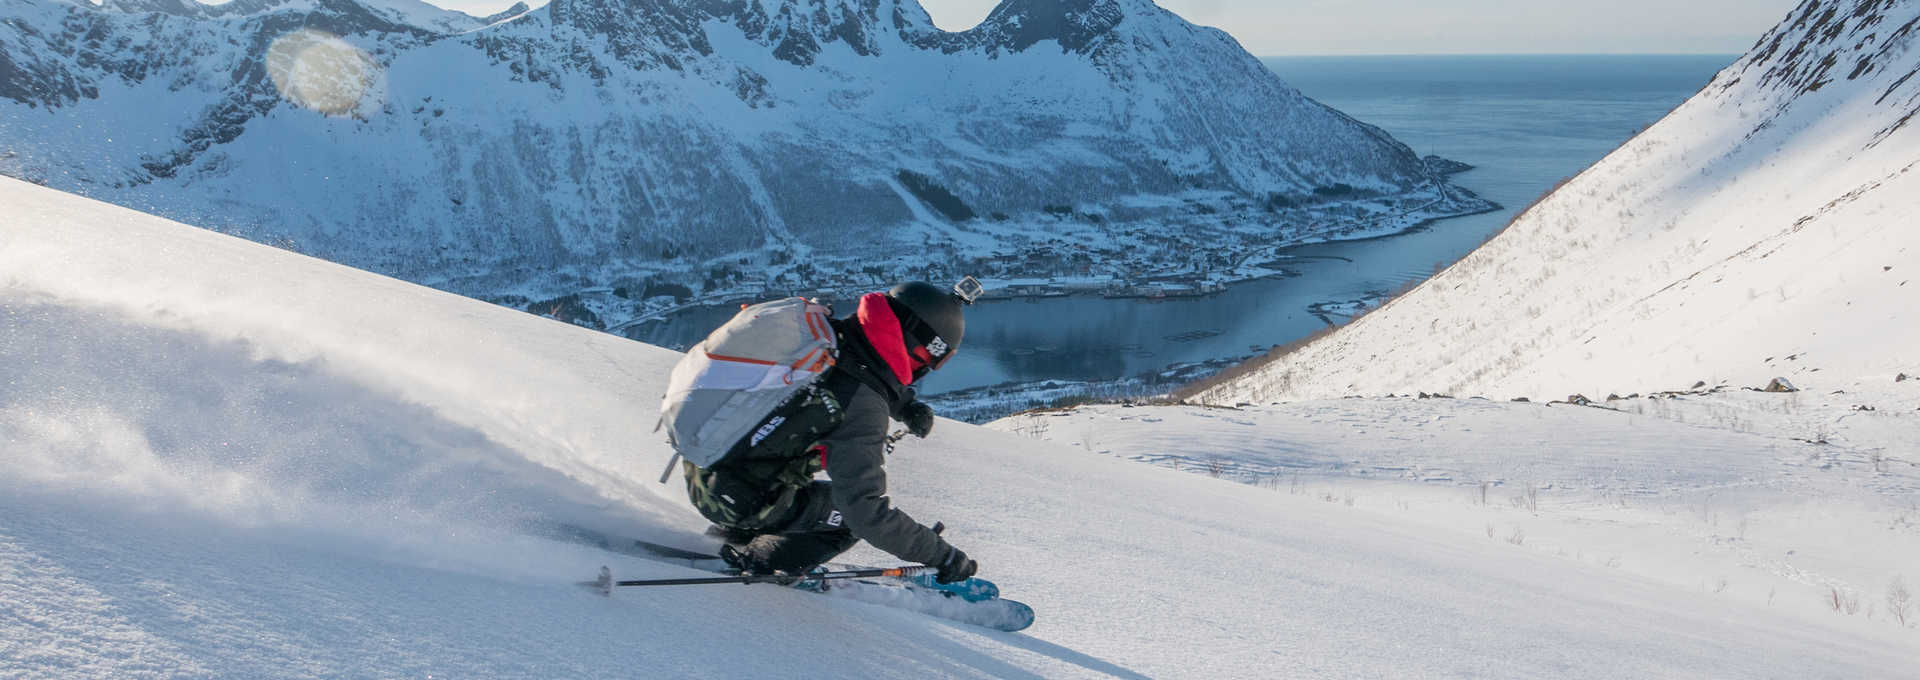 Séjour ski en Norvège du Nord